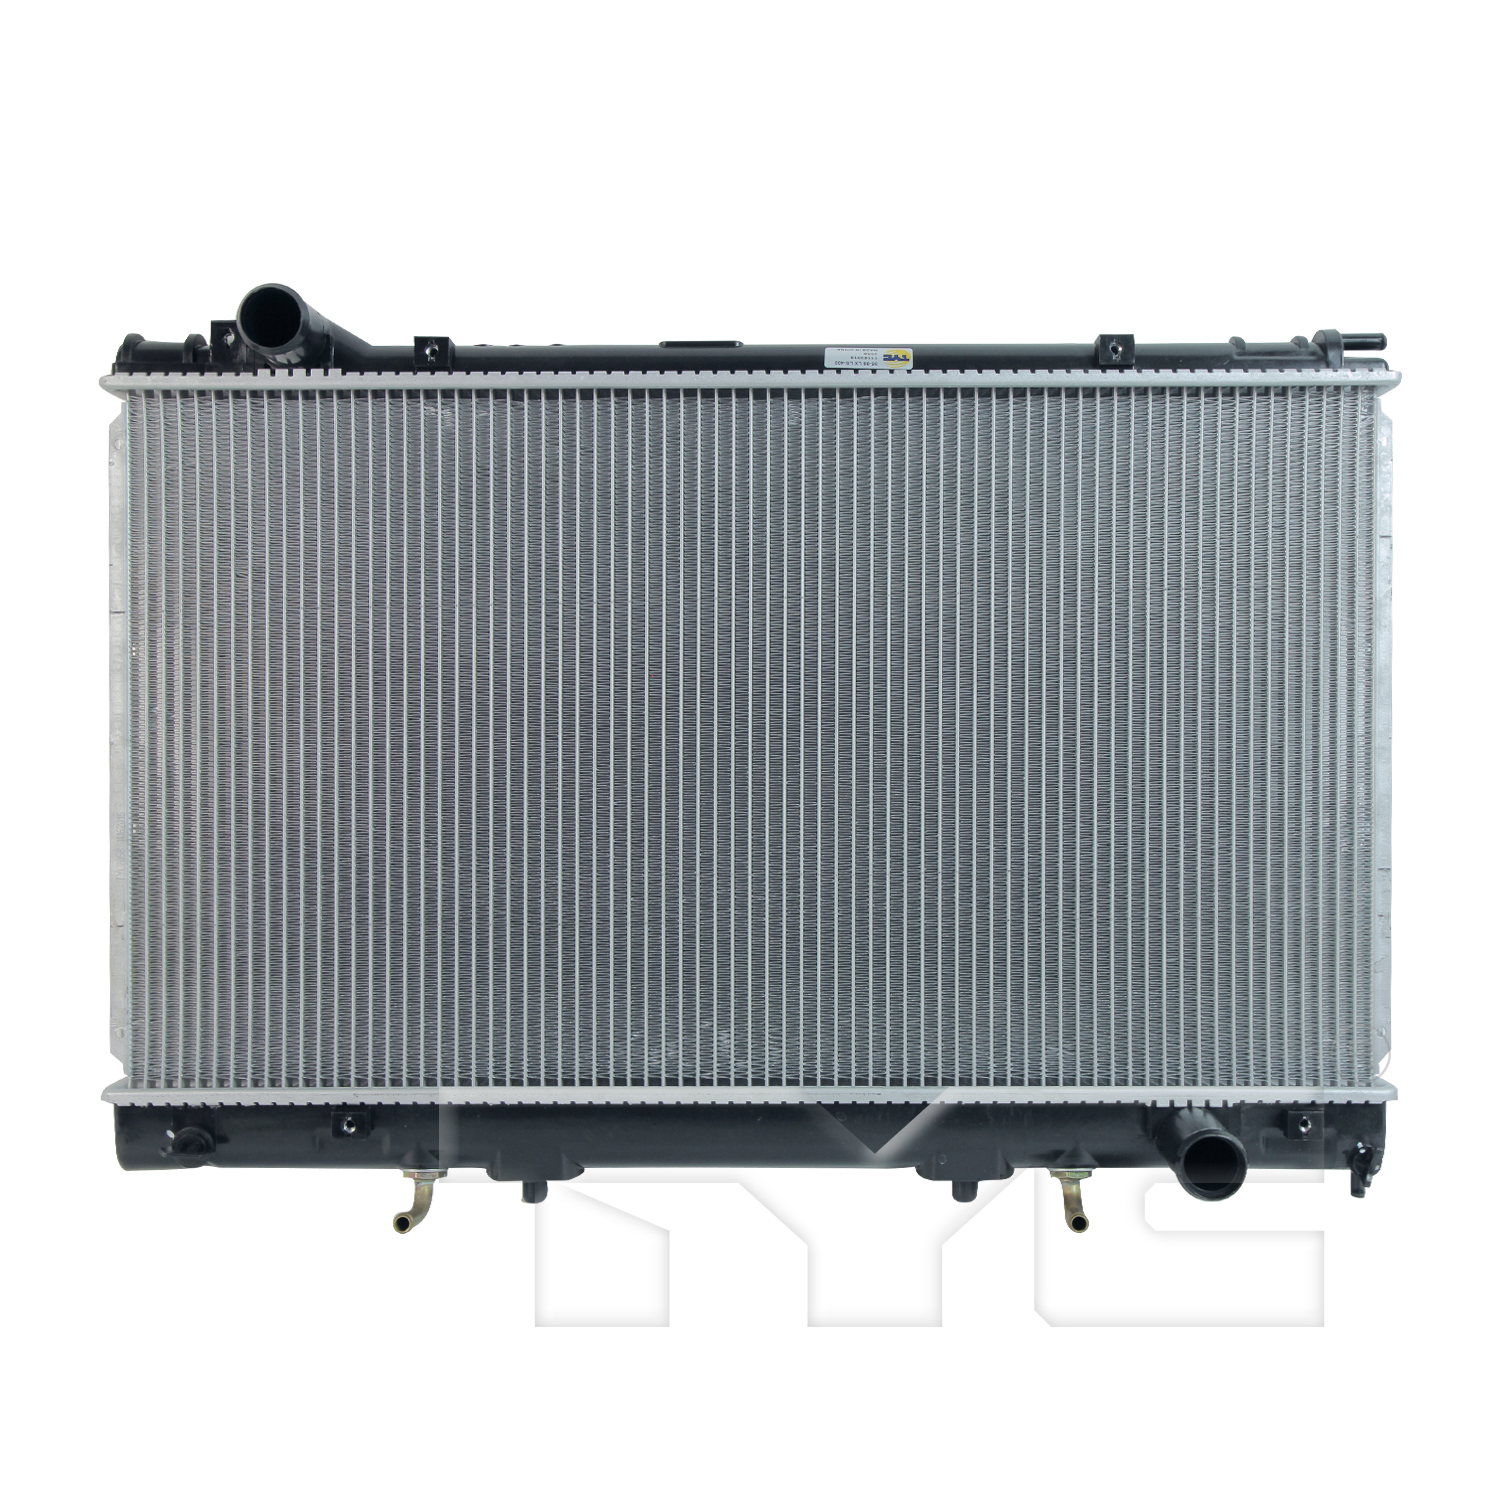 Aftermarket RADIATORS for LEXUS - LS400, LS400,95-00,Radiator assembly